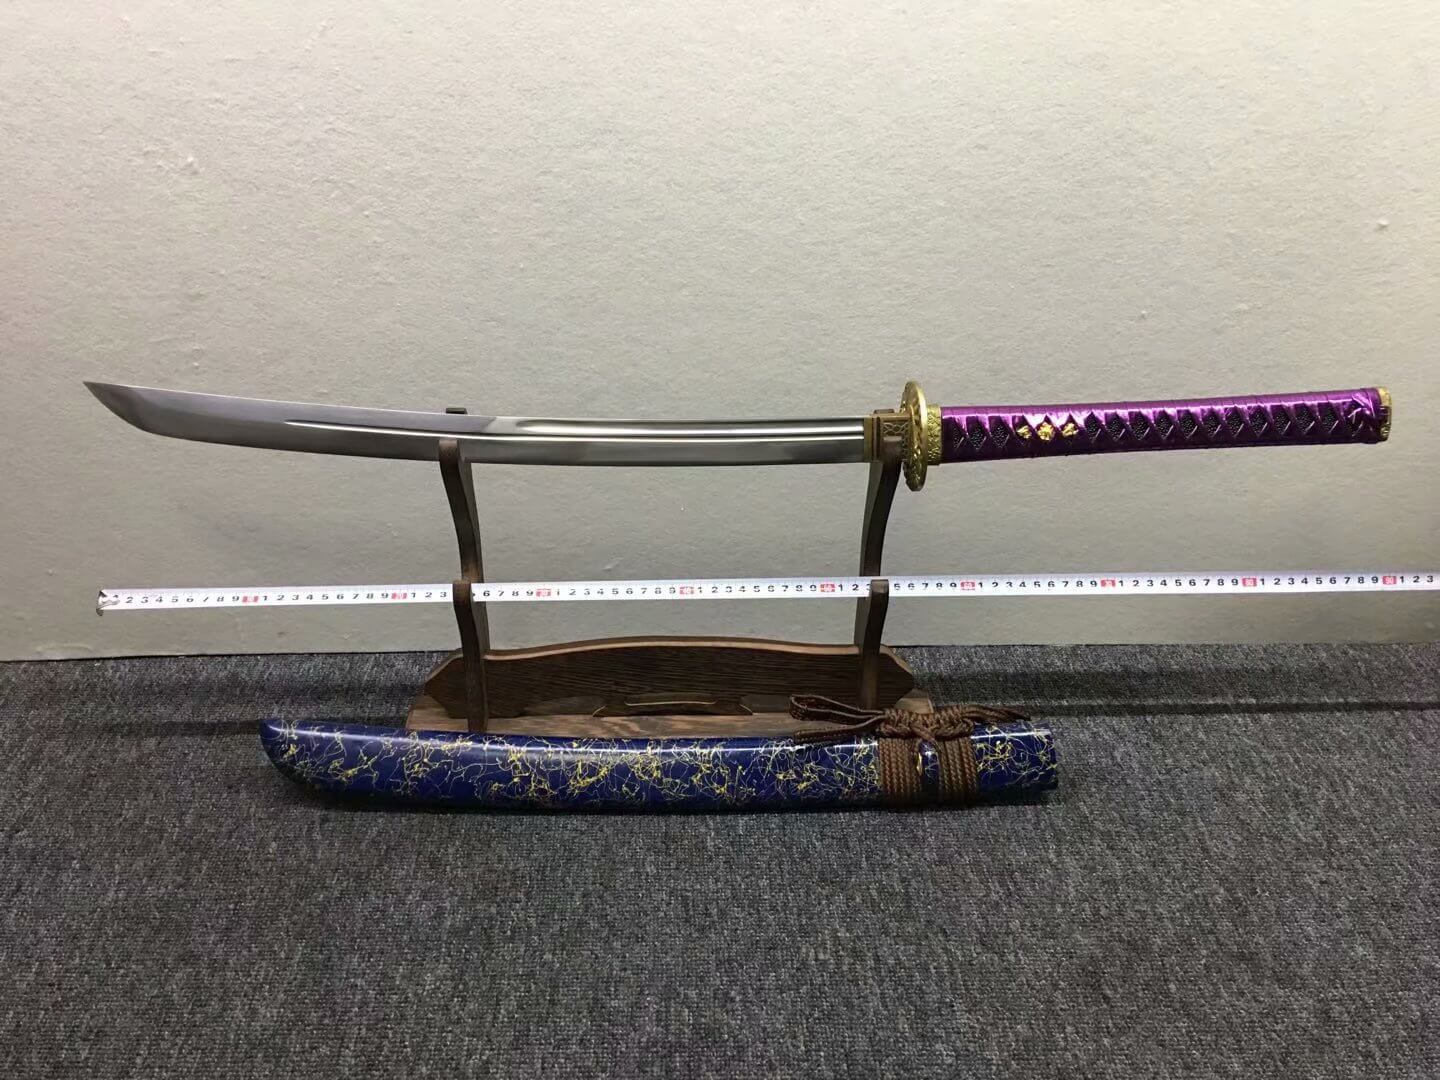 Horse chopping sword,Katana,High carbon steel blade - Chinese sword shop